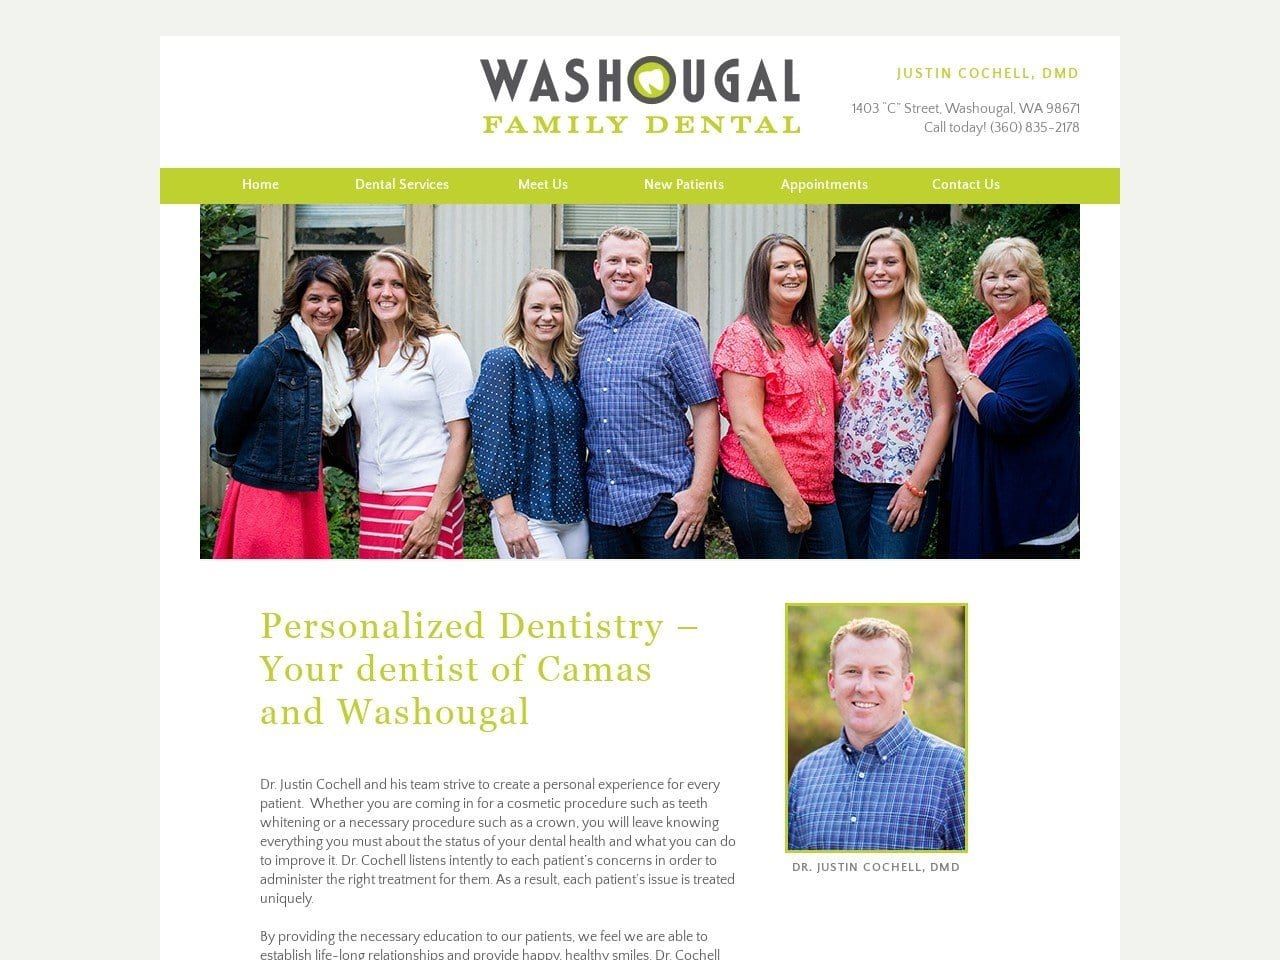 Justin Cochell DMD Website Screenshot from washougalfamilydental.com